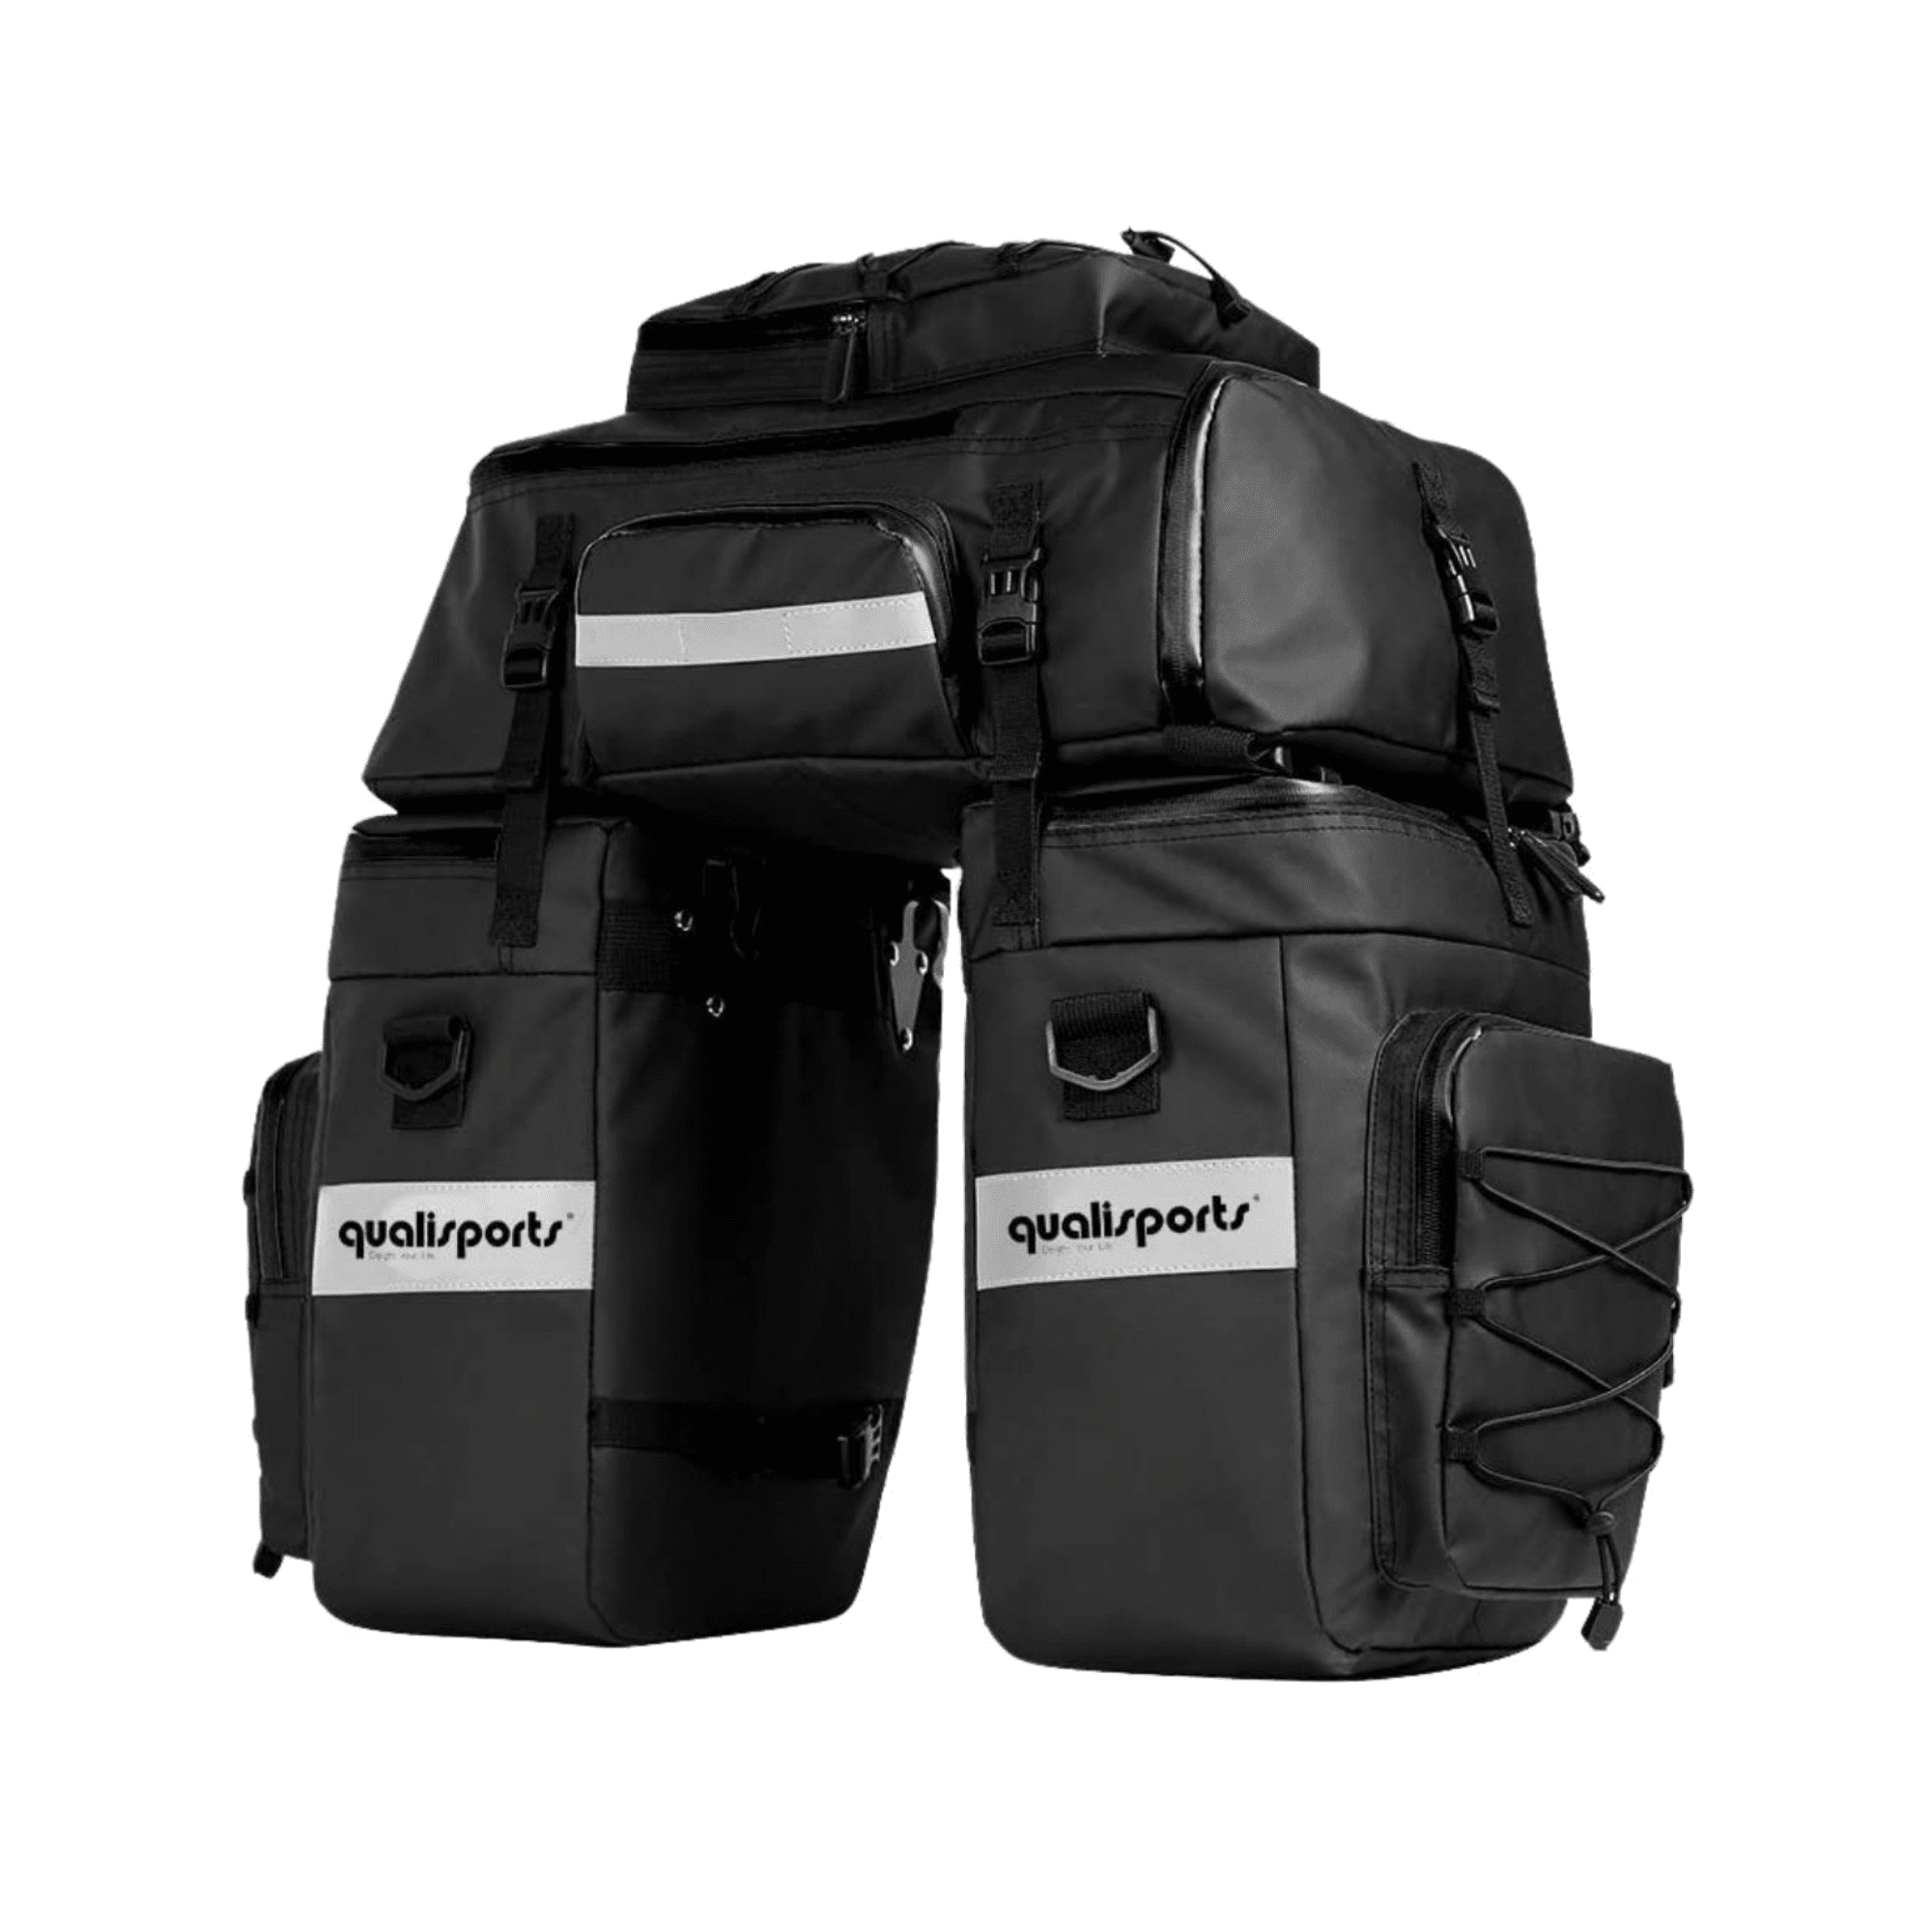 Pannier Bag Set 3 in 1 Qualisports USA